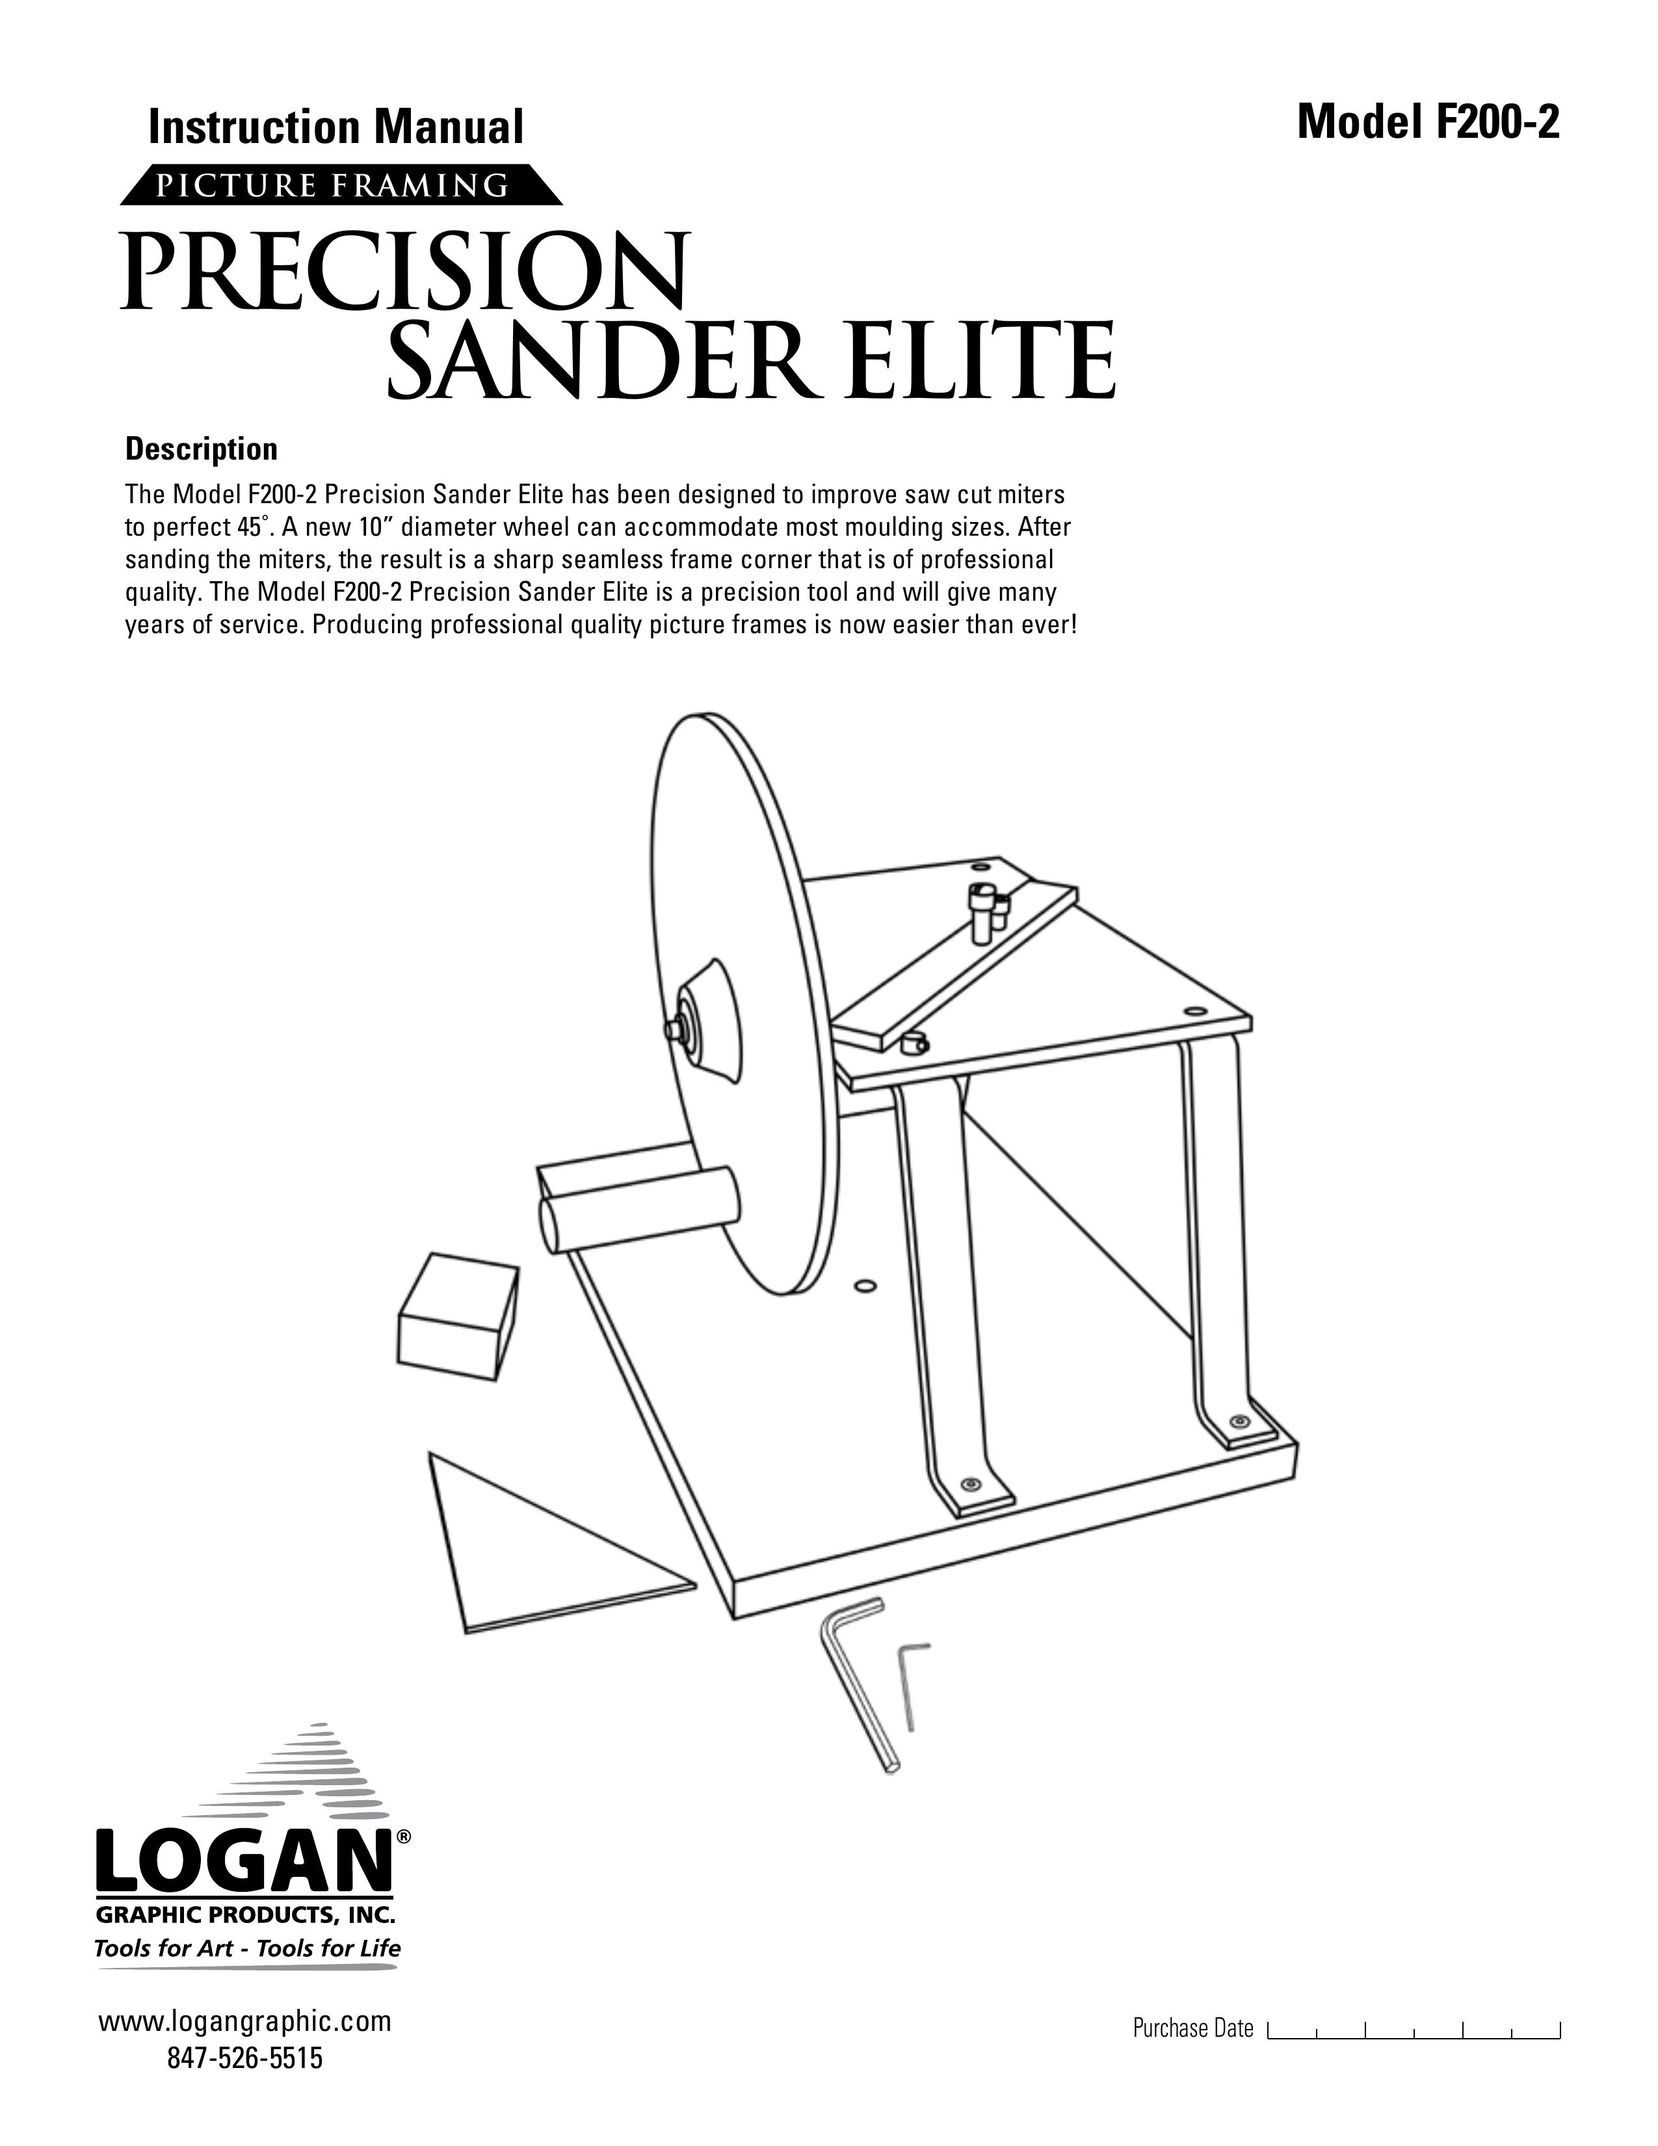 Logan Graphic Products F200-2 Sander User Manual